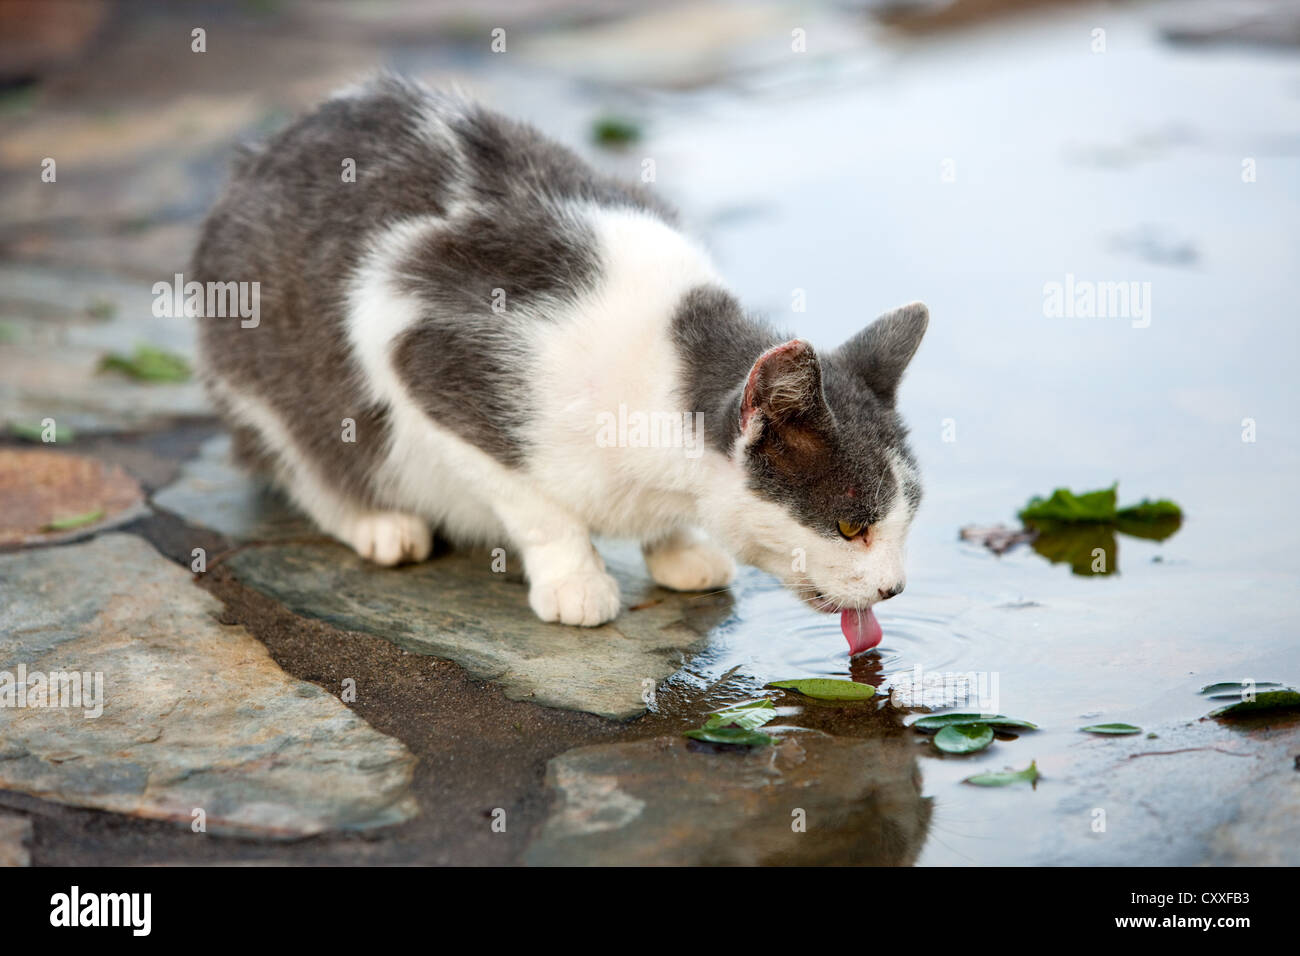 Gato bebiendo agua de un charco, Tenerife, España, Europa Foto de stock